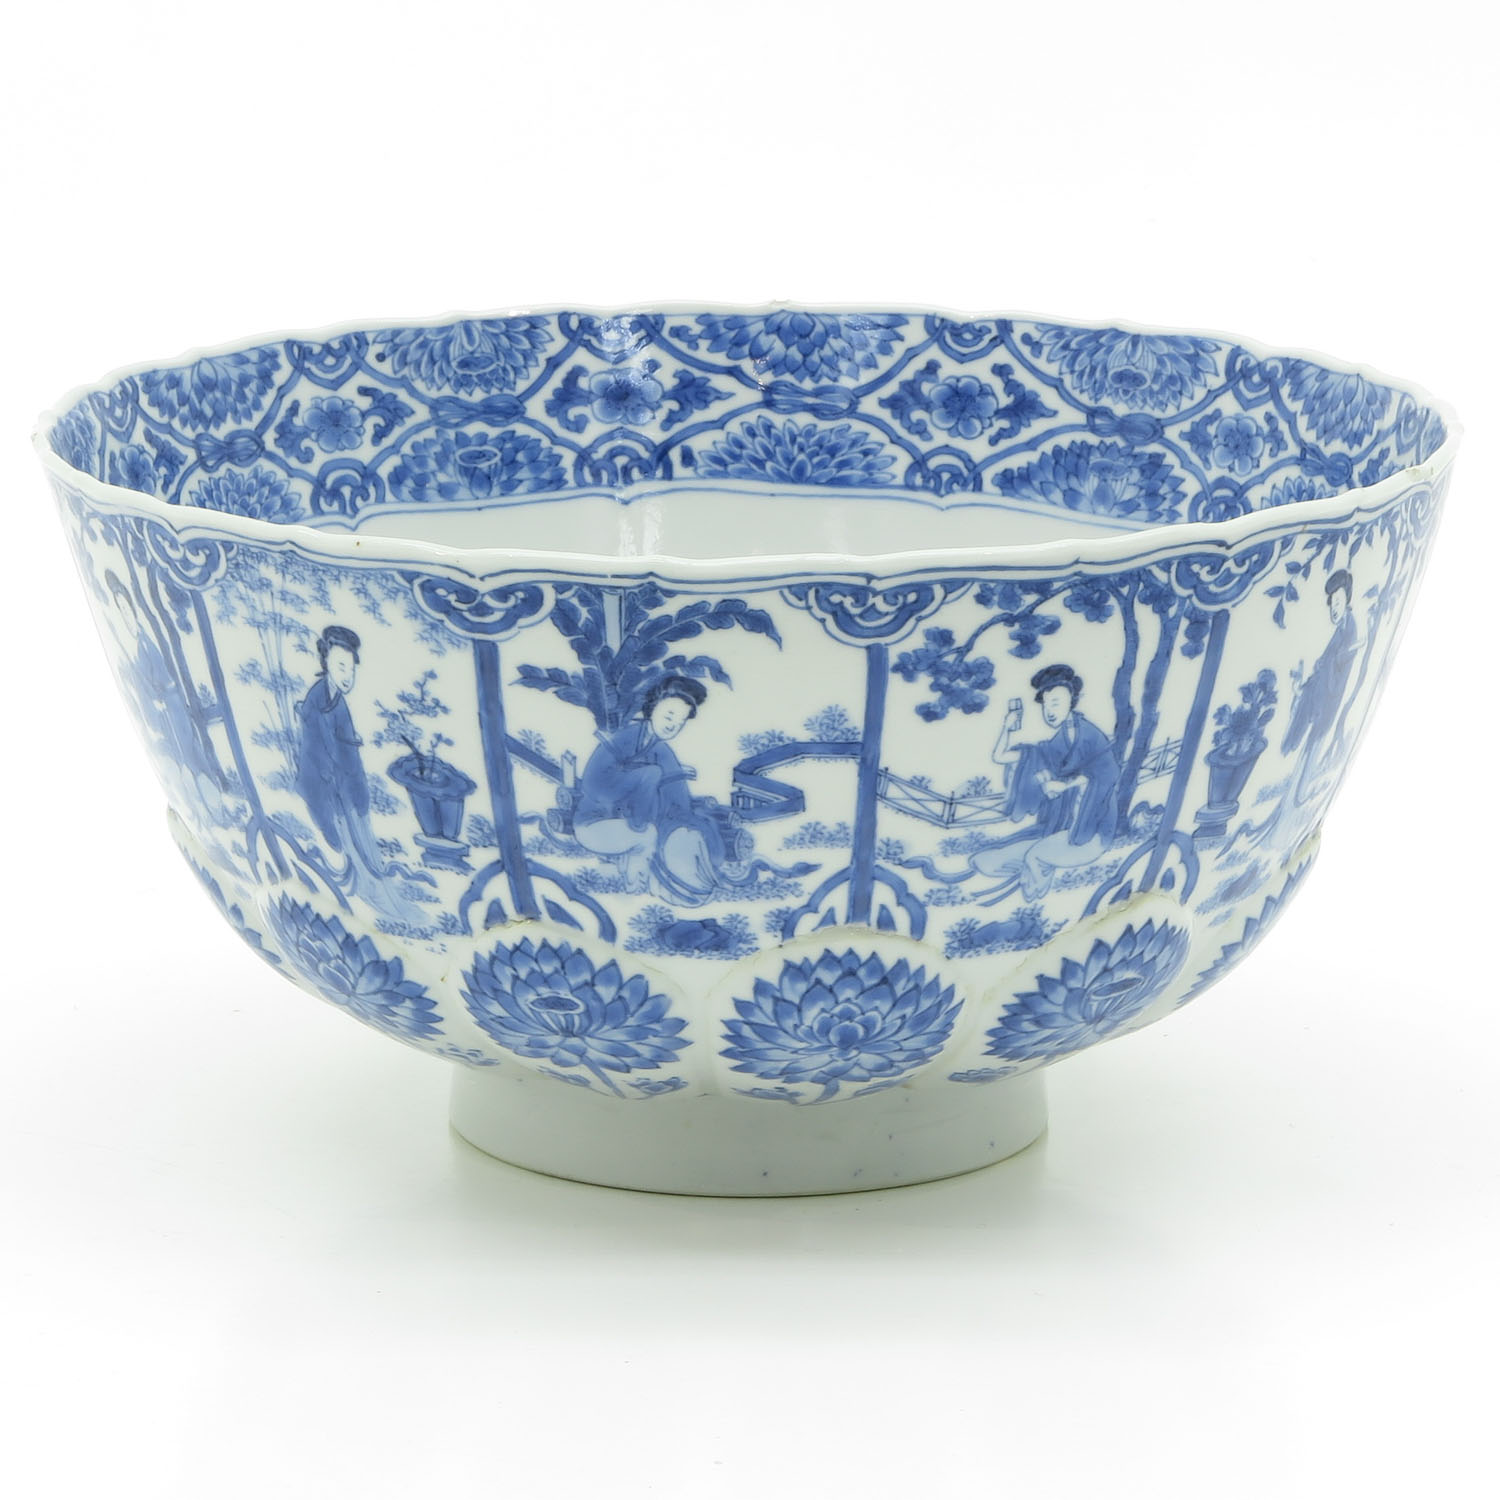 18th Century China Porcelain Bowl